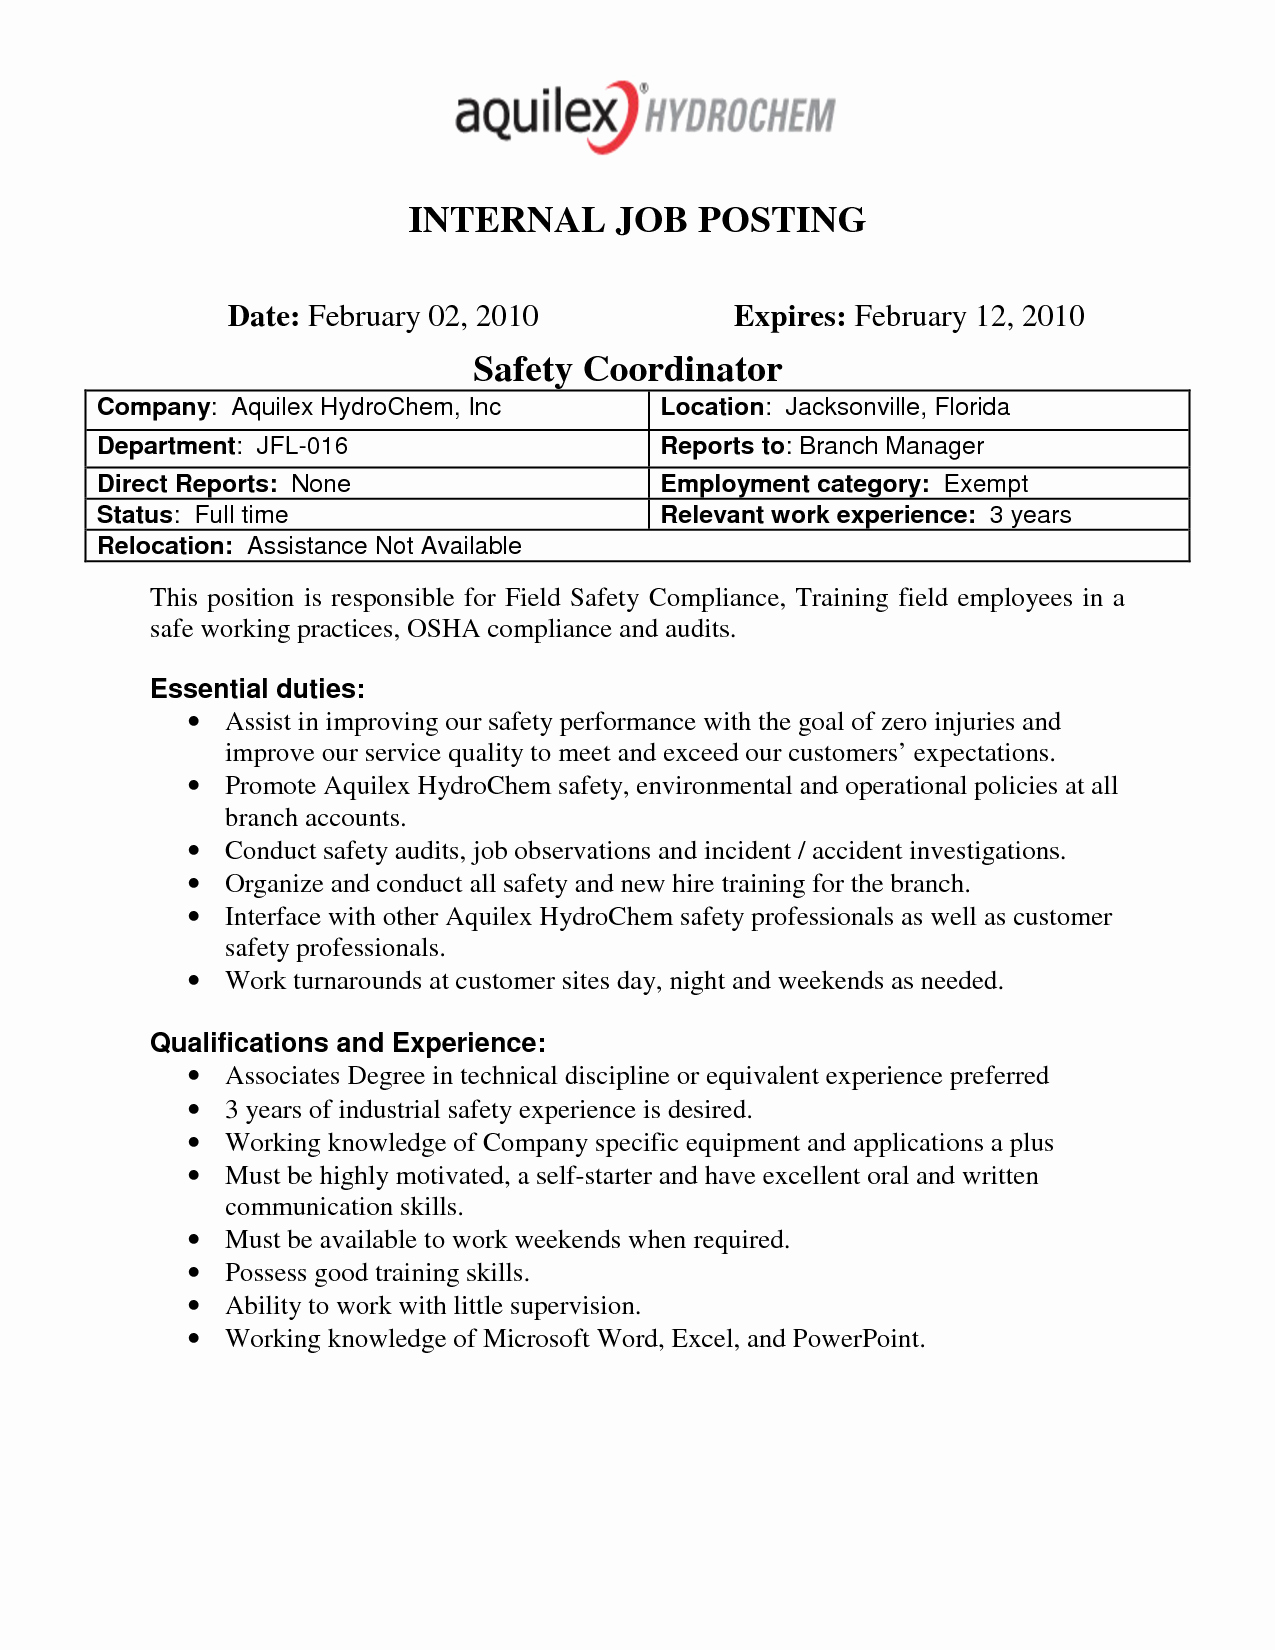 Job Posting Examples Best Of Best S Of Resume for Internal Job Posting Internal